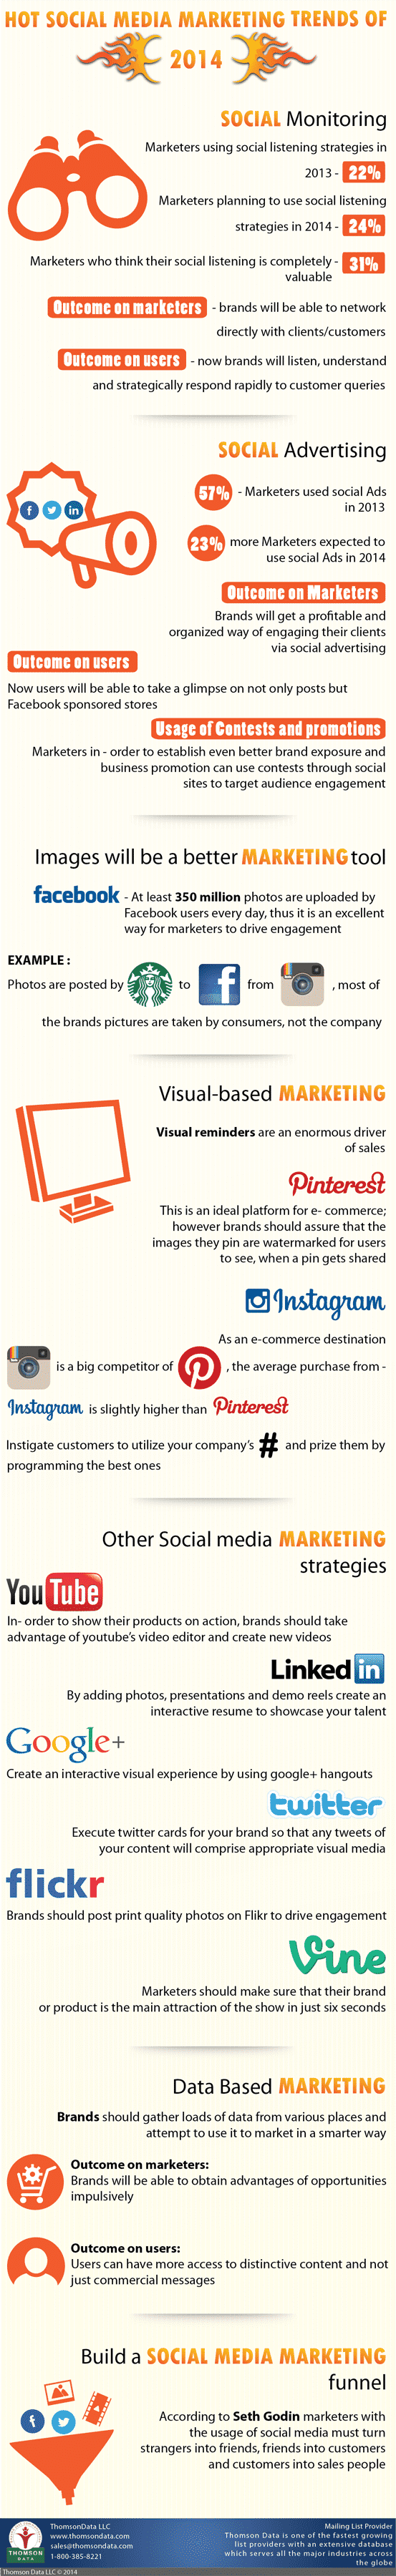 Hot Social Media Marketing Trends of 2014 [Infographic]